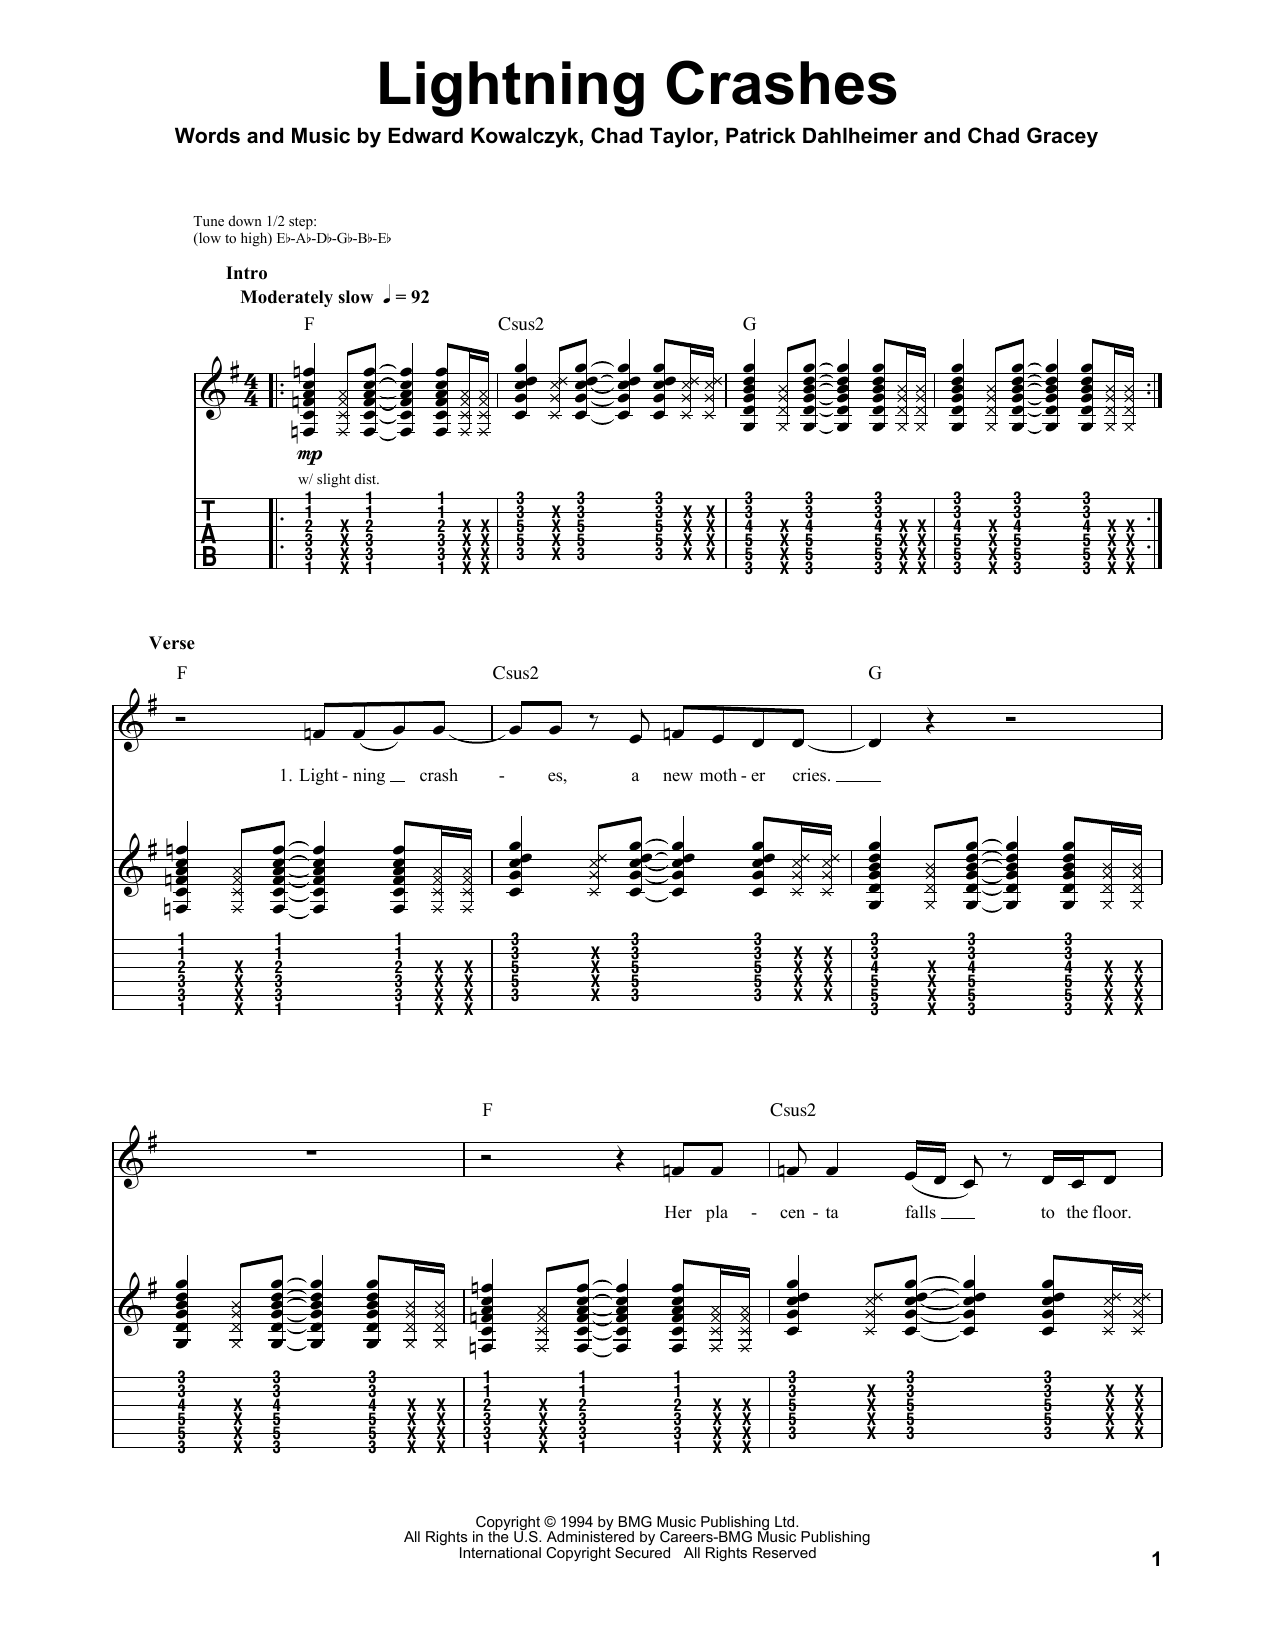 Live Lightning Crashes Sheet Music Notes & Chords for Guitar Tab - Download or Print PDF